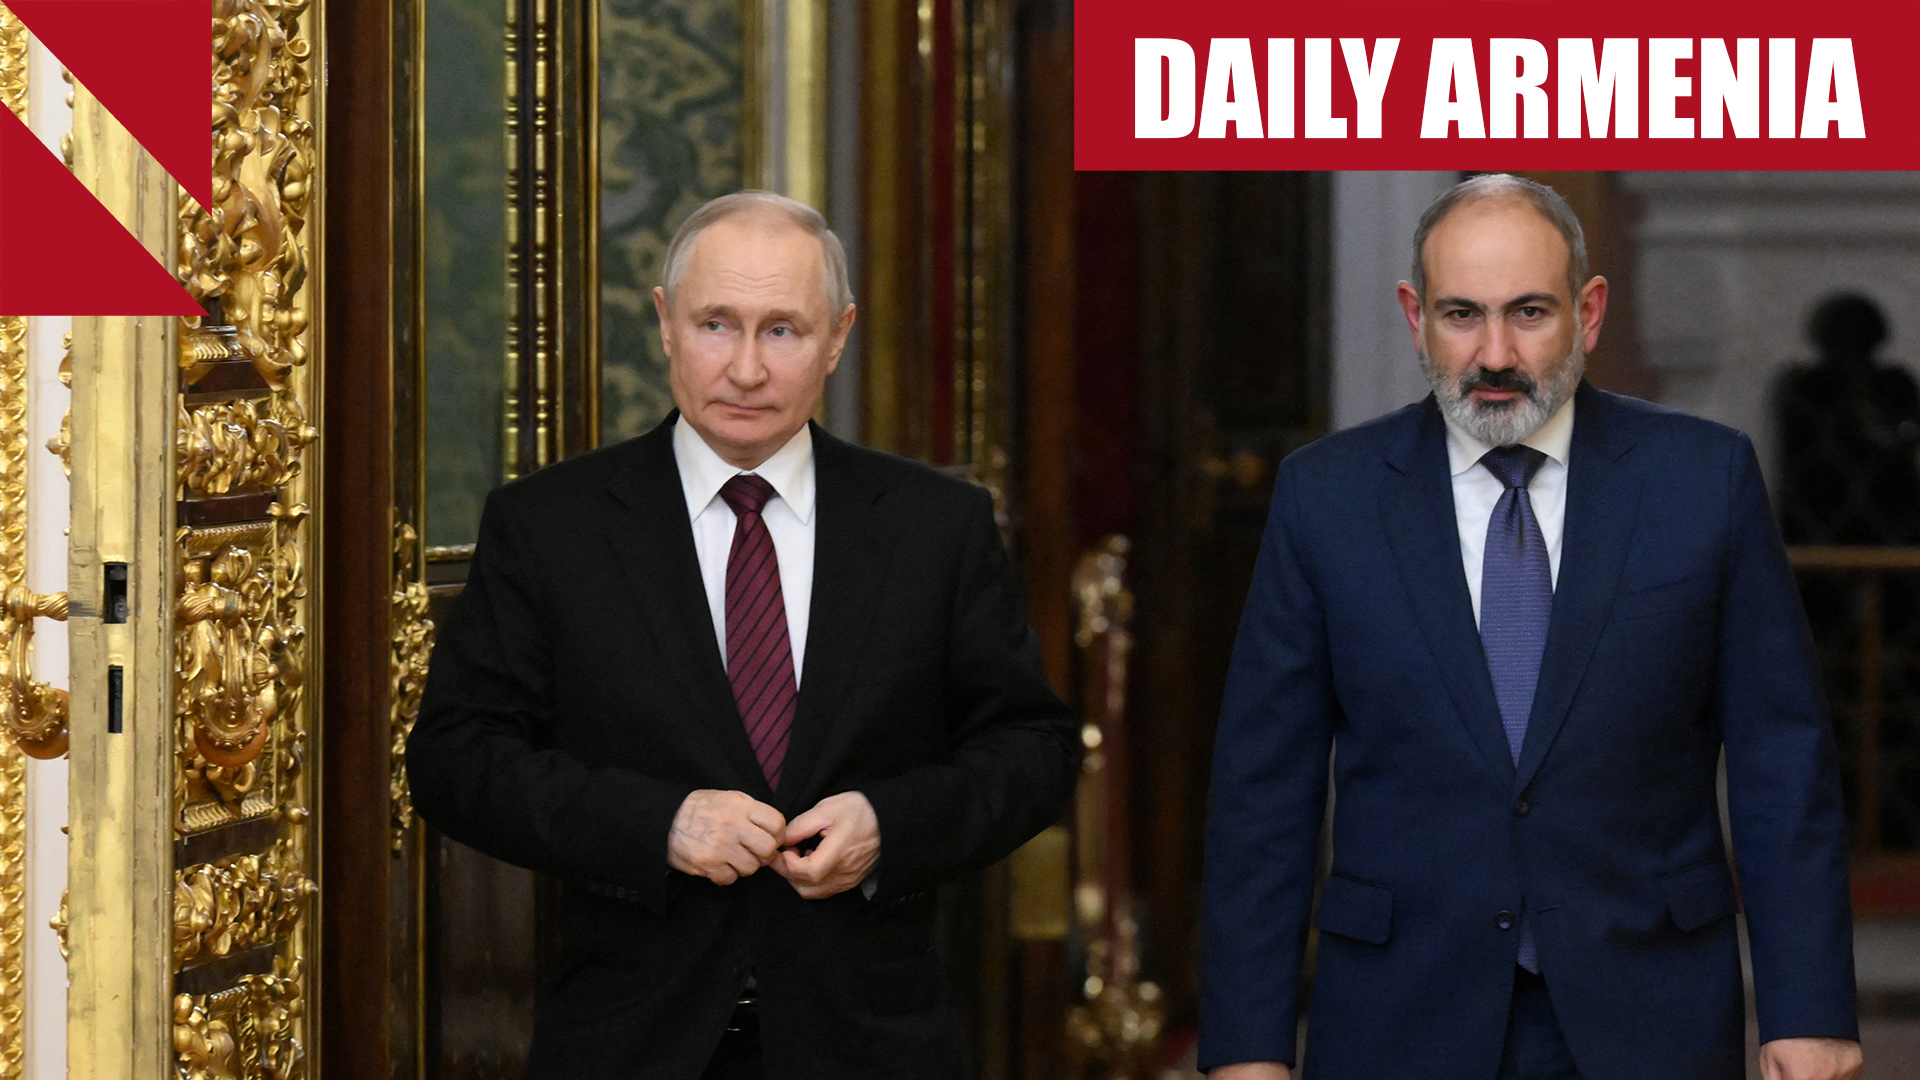 Pashinyan denies any misstep regarding Russia relations 